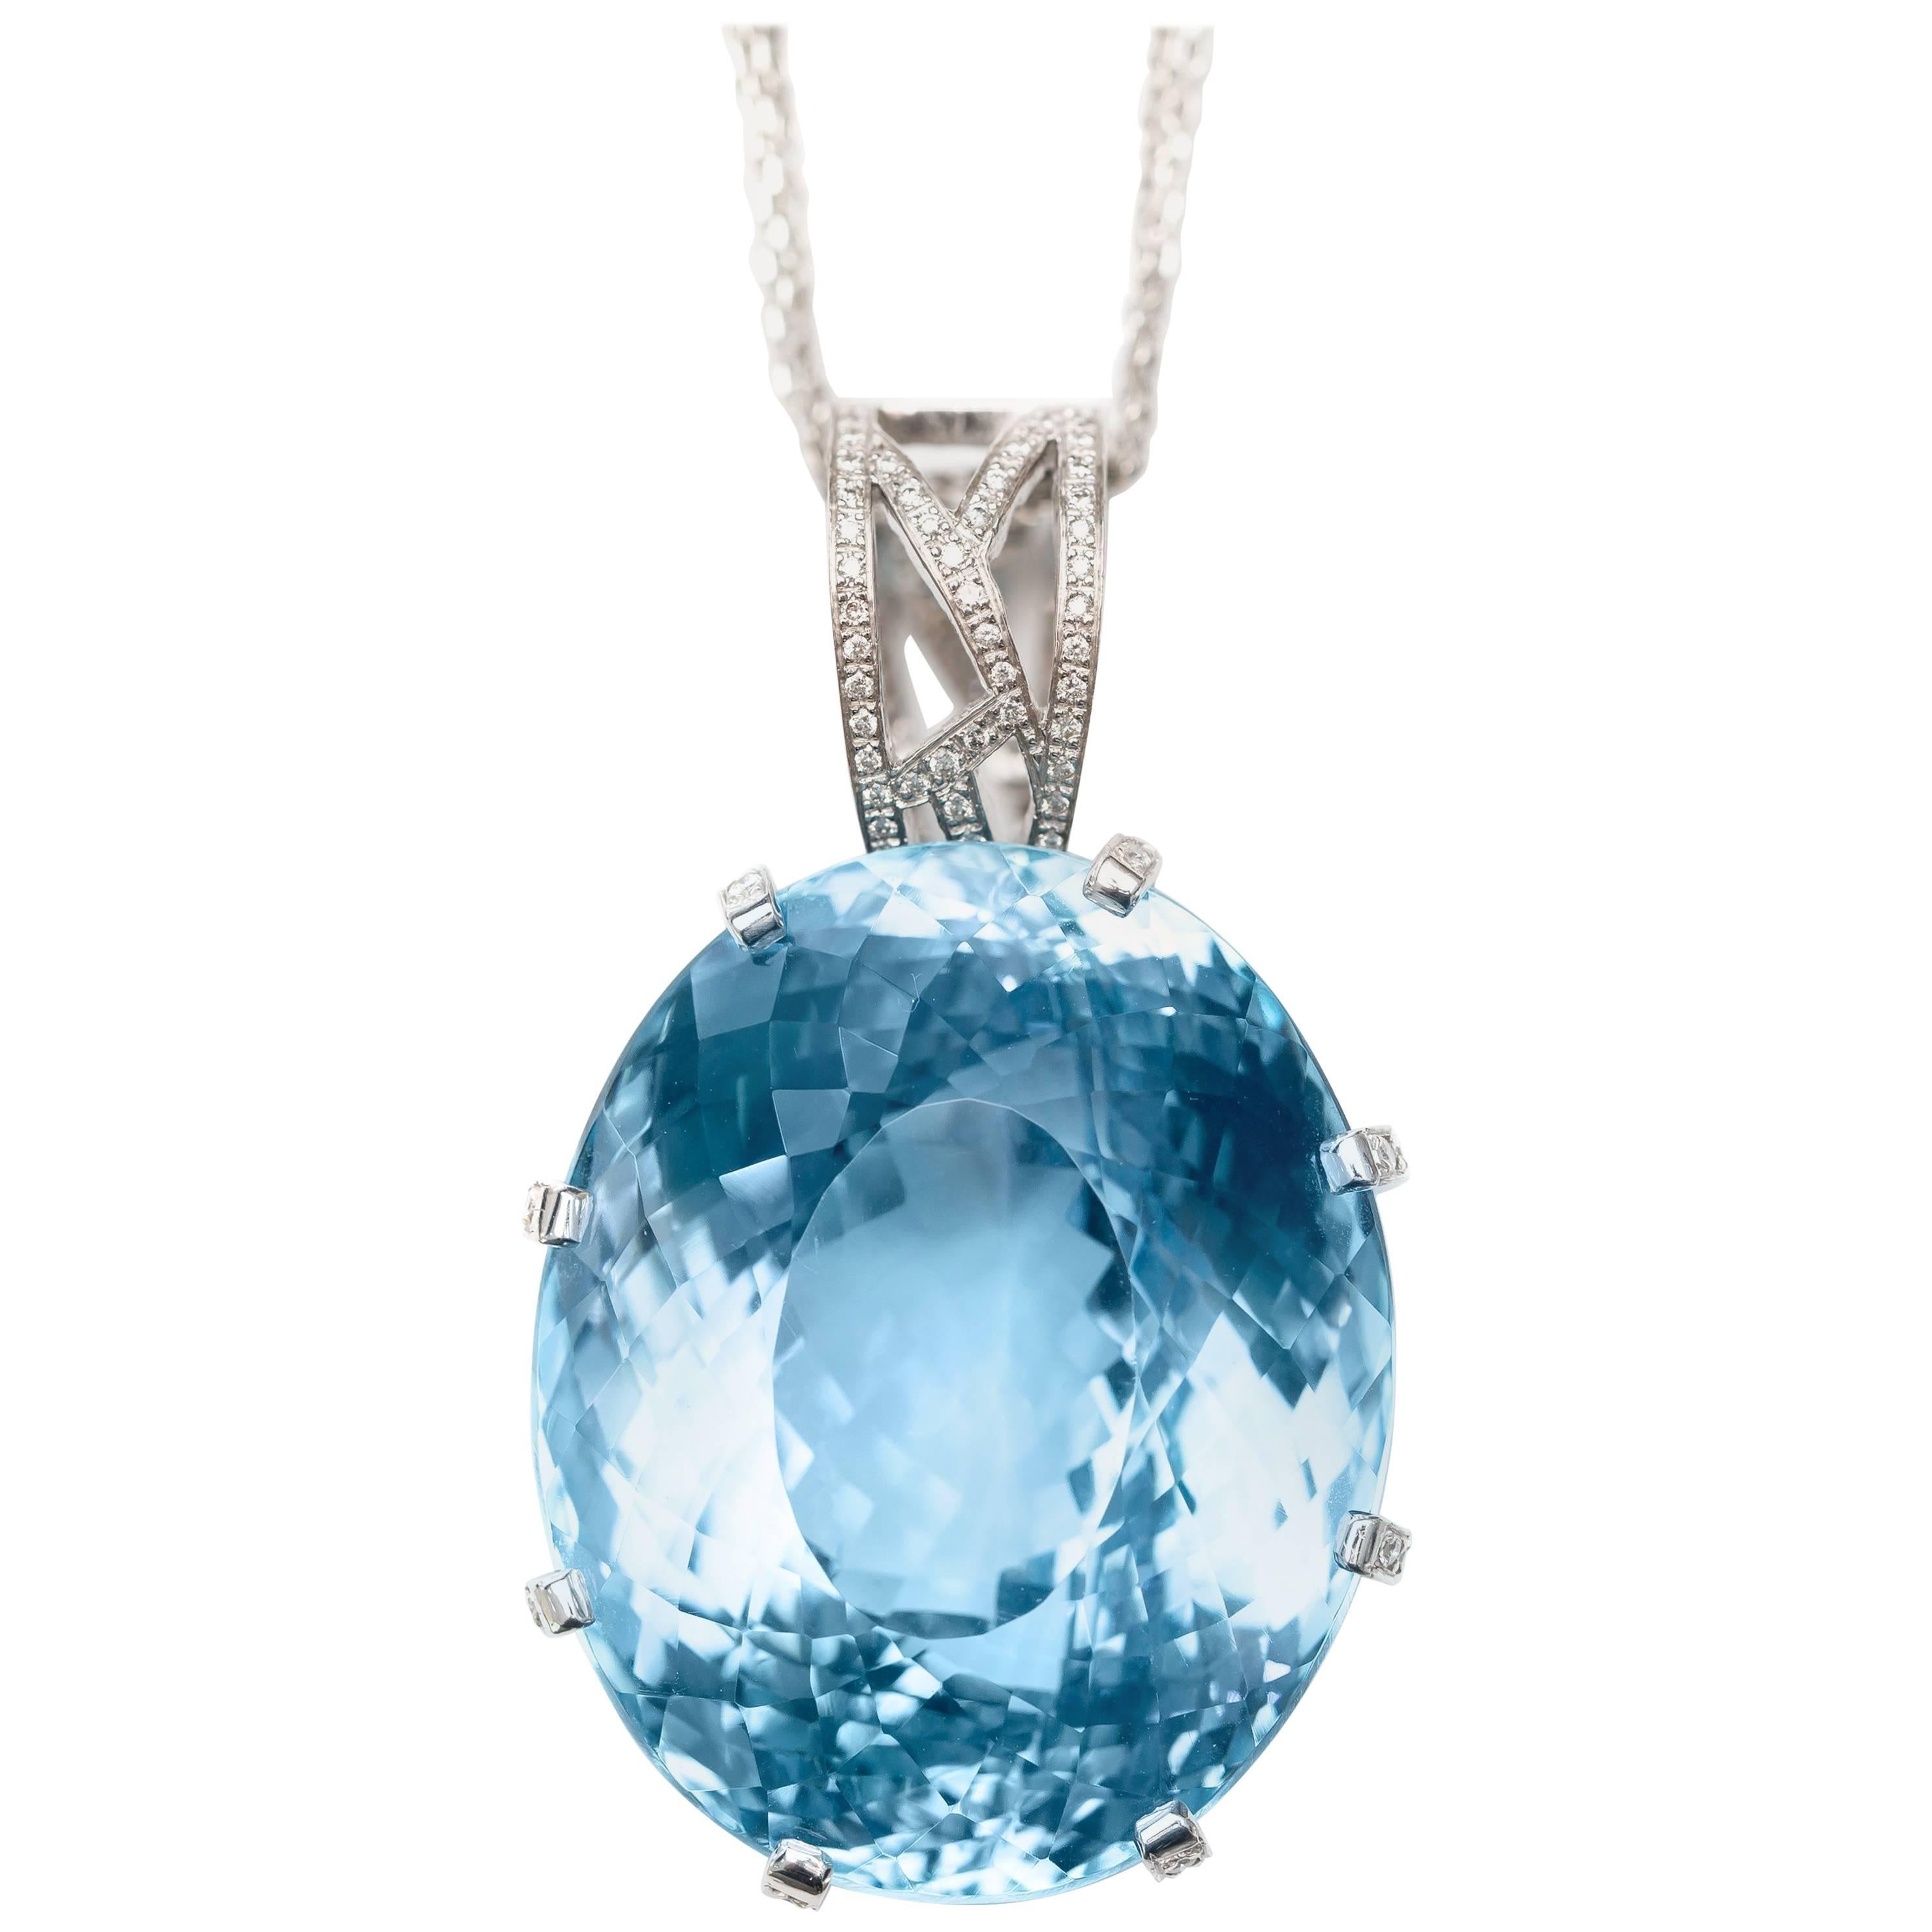 226.34 Carat Blue Topaz 18 Karat White Gold with Diamond Mount Pendant Necklace For Sale